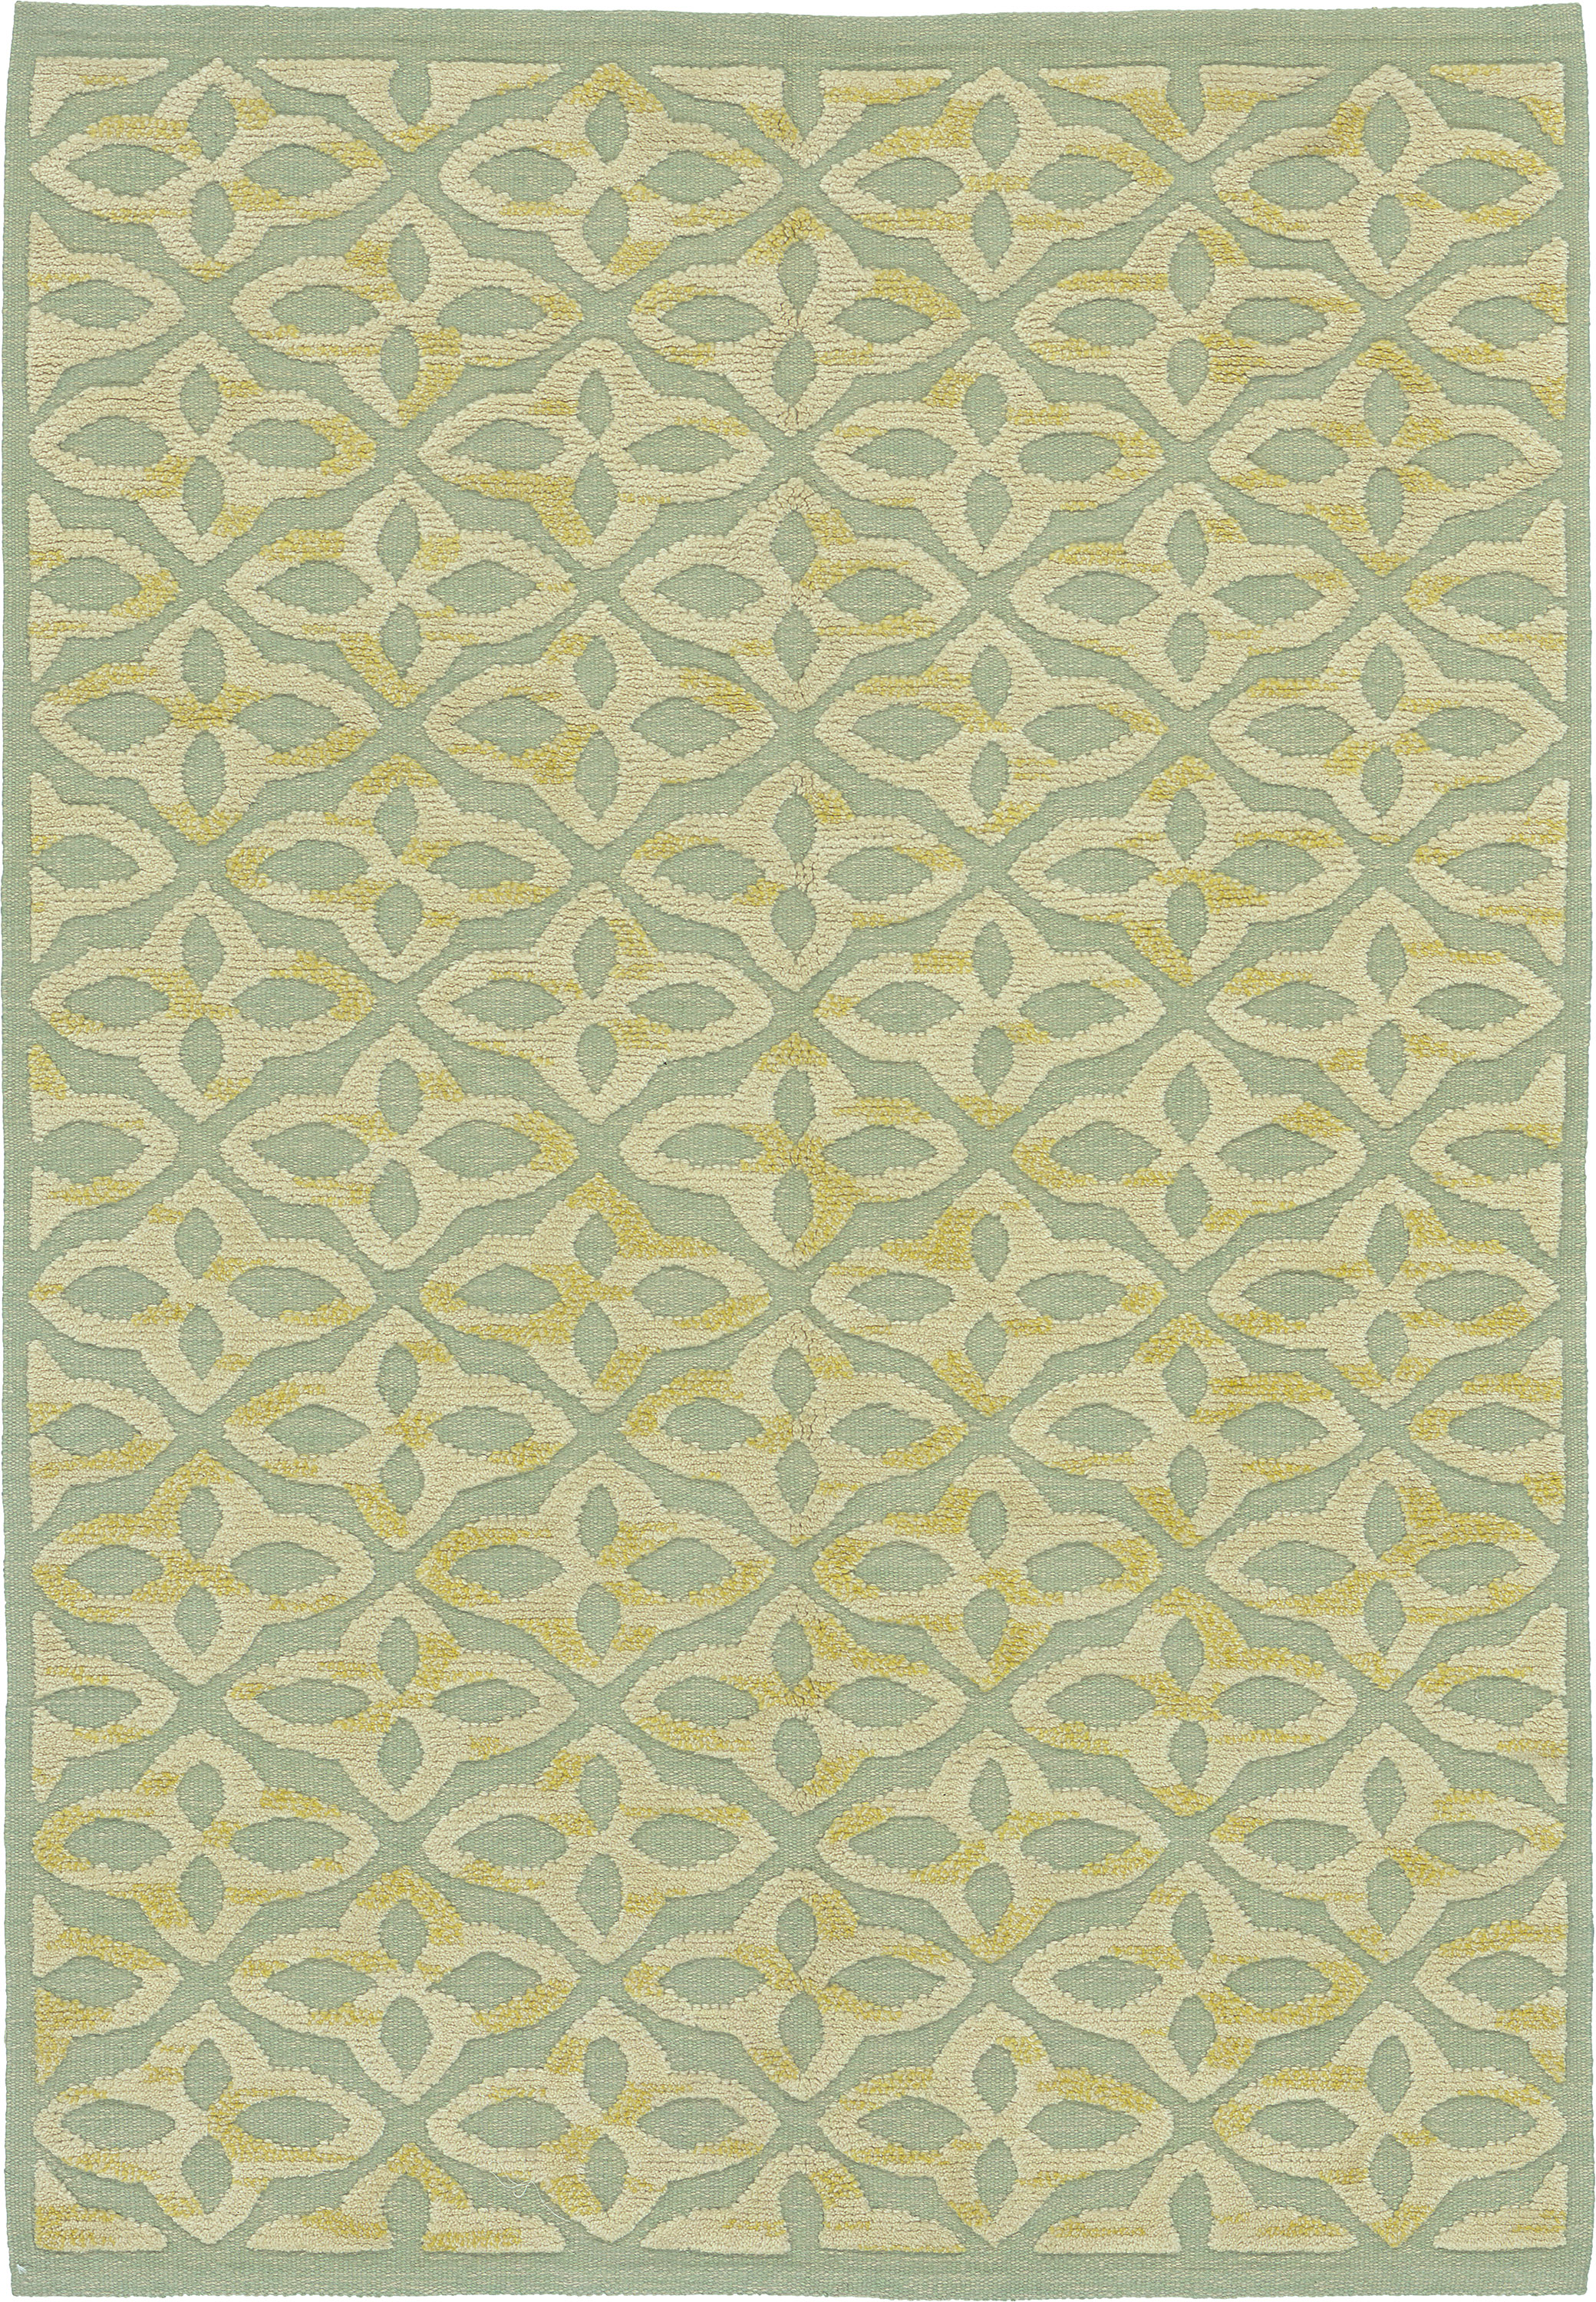 16719 Evita Design | Custom Swedish Inspired Design Carpet | FJ Hakimian | Carpet Gallery in NYC